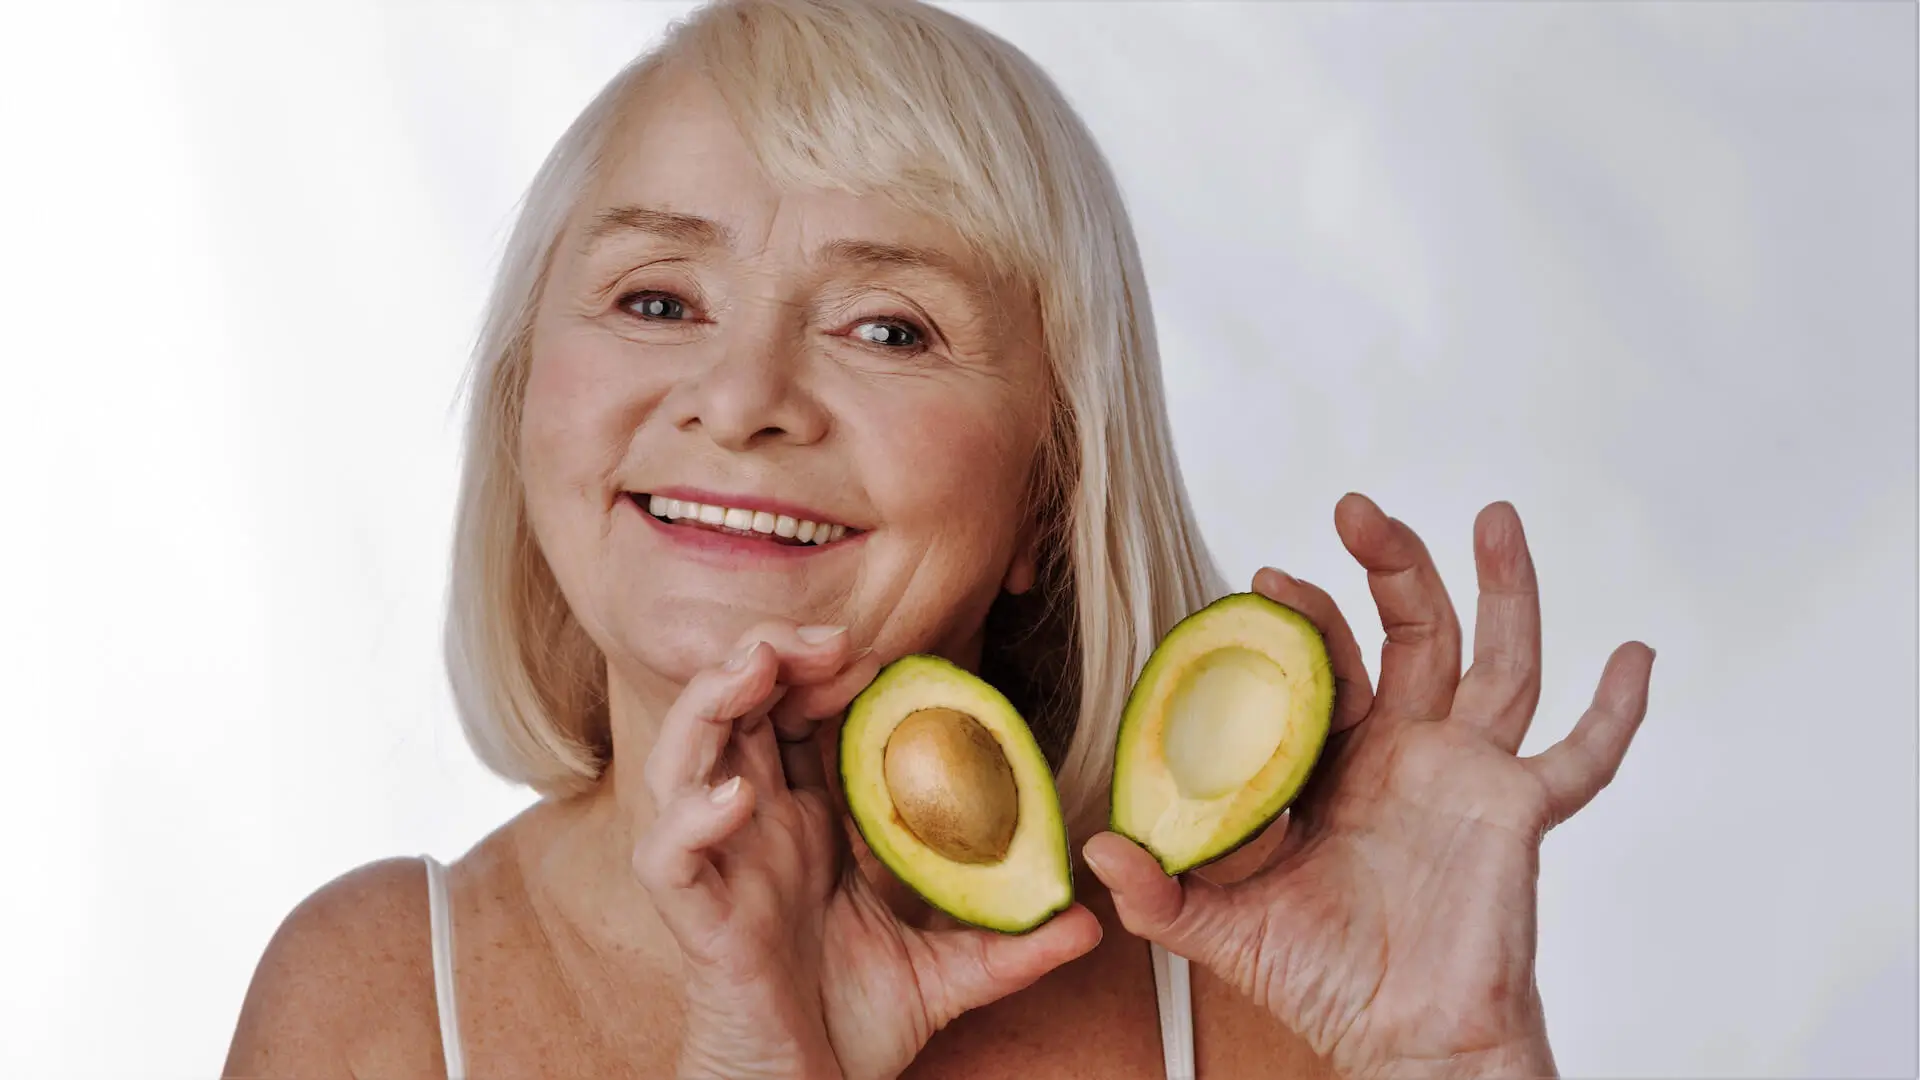 Cheerful happy woman showing you avocado halves